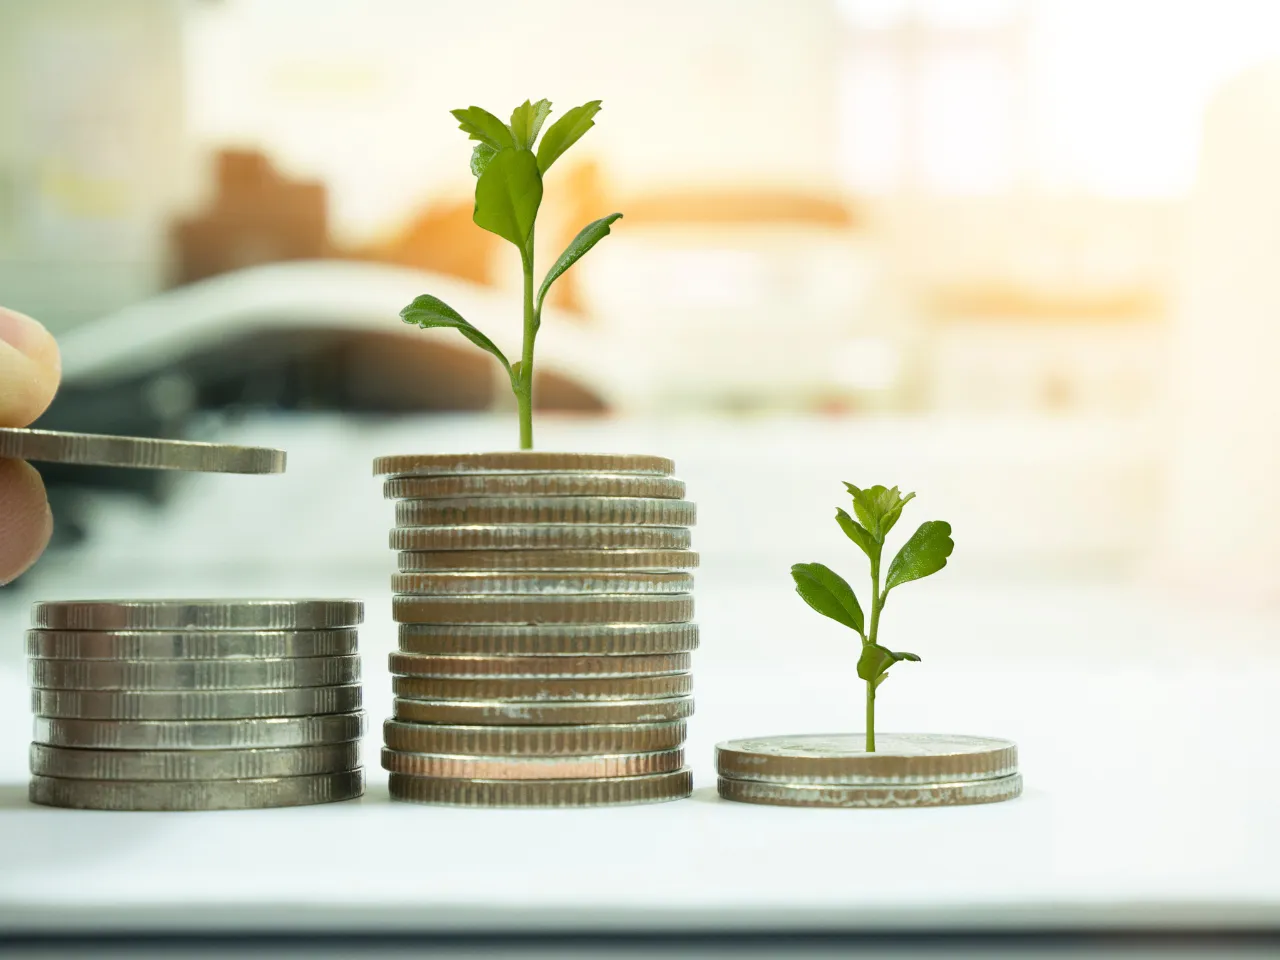 Financial Services Startup CapitalSetu Raises $350K As Seed Fund